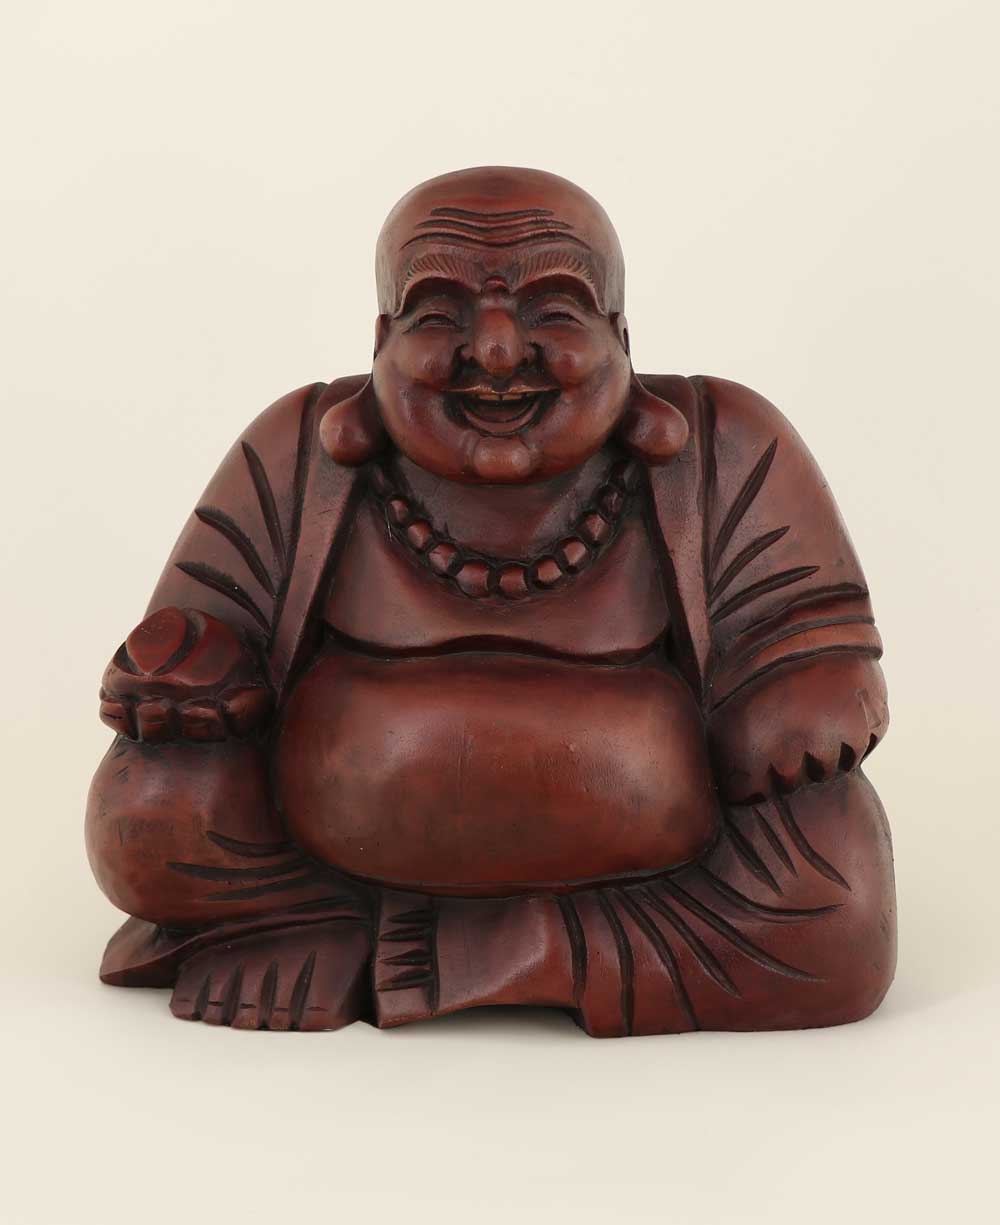 Mahogany Finish Sitting Happy Buddha Statue - Sculptures & Statues